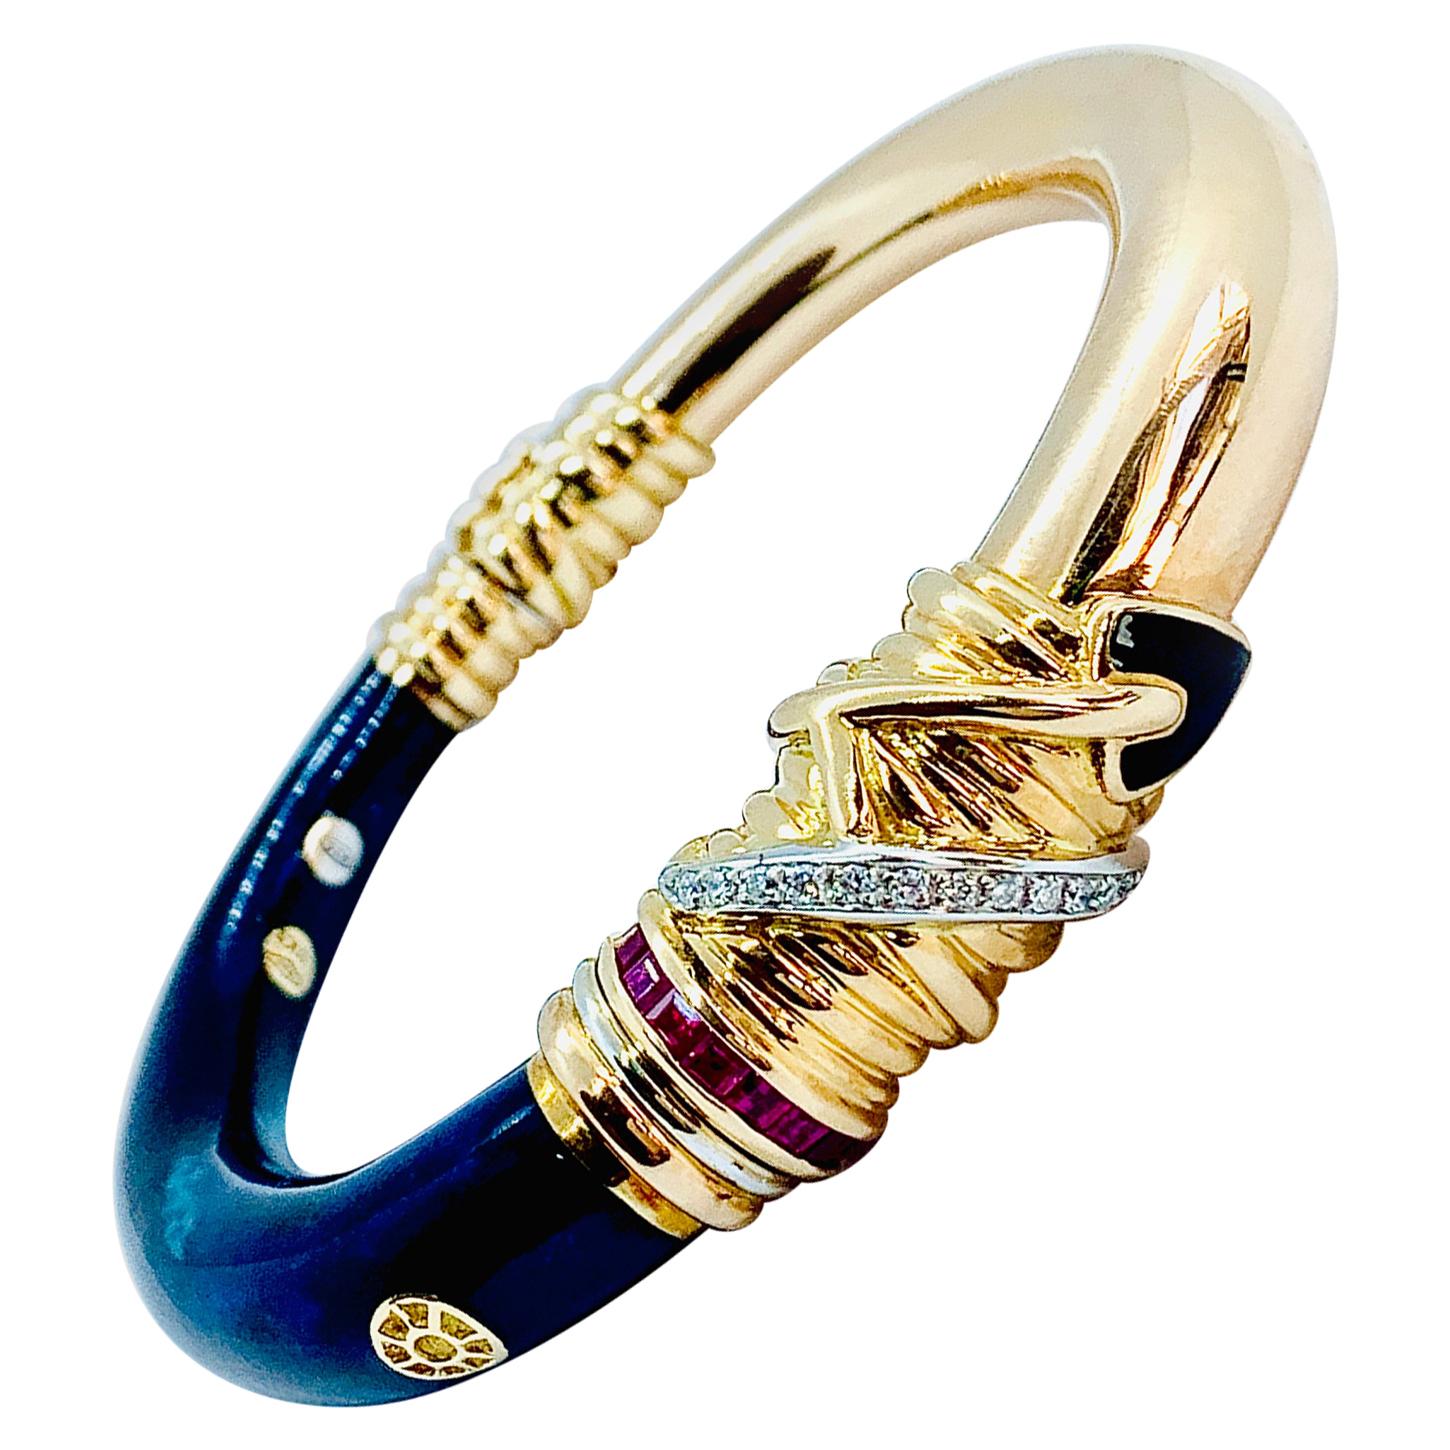 La Nouvelle Bague 18 Karat Gold, Diamond, Ruby and Blue Enamel Bangle Bracelet